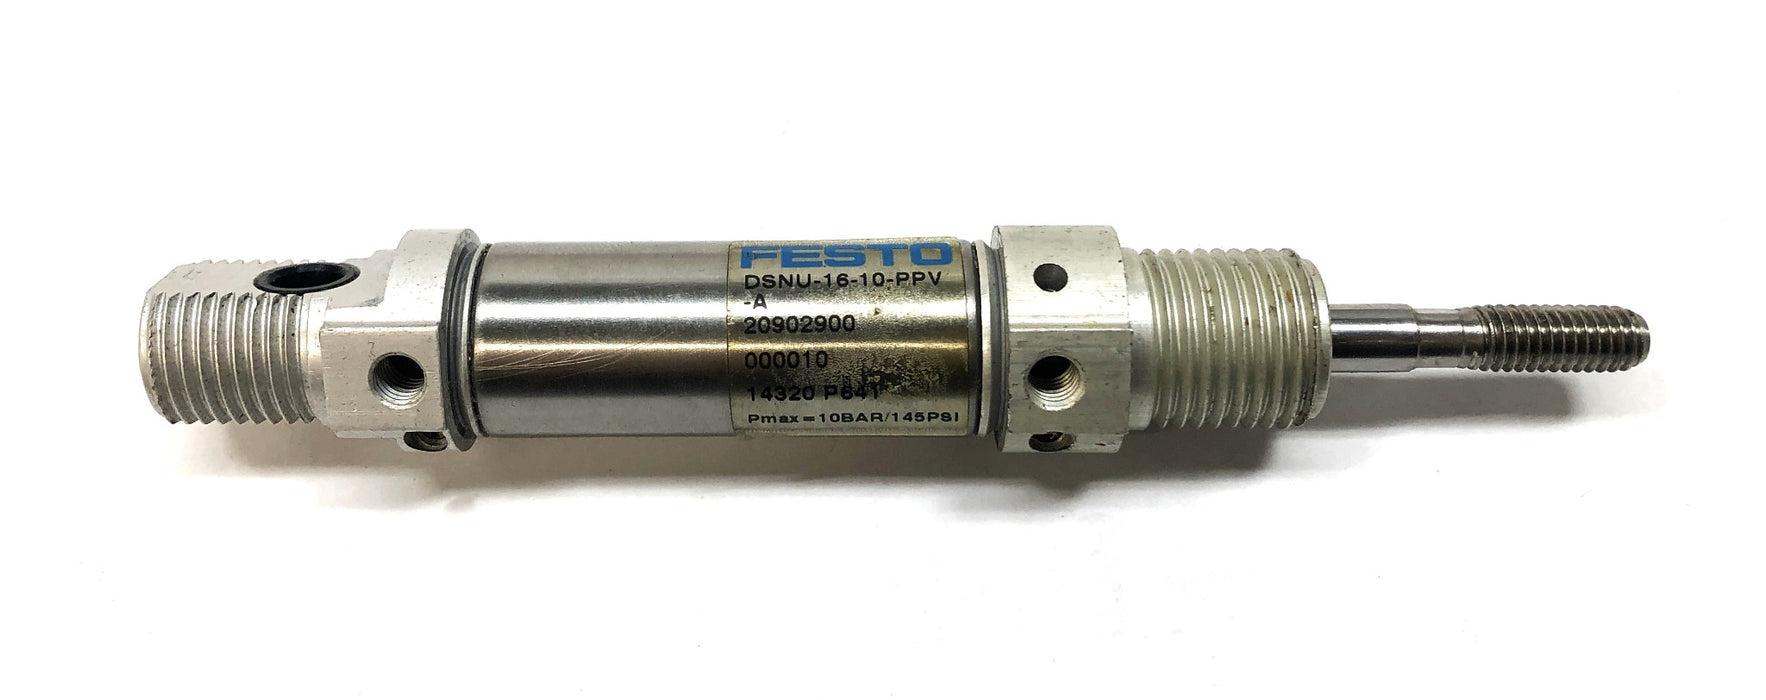 Festo Standard Pneumatic Air Cylinder DSNU-16-10-PPV-A (14320) NOS